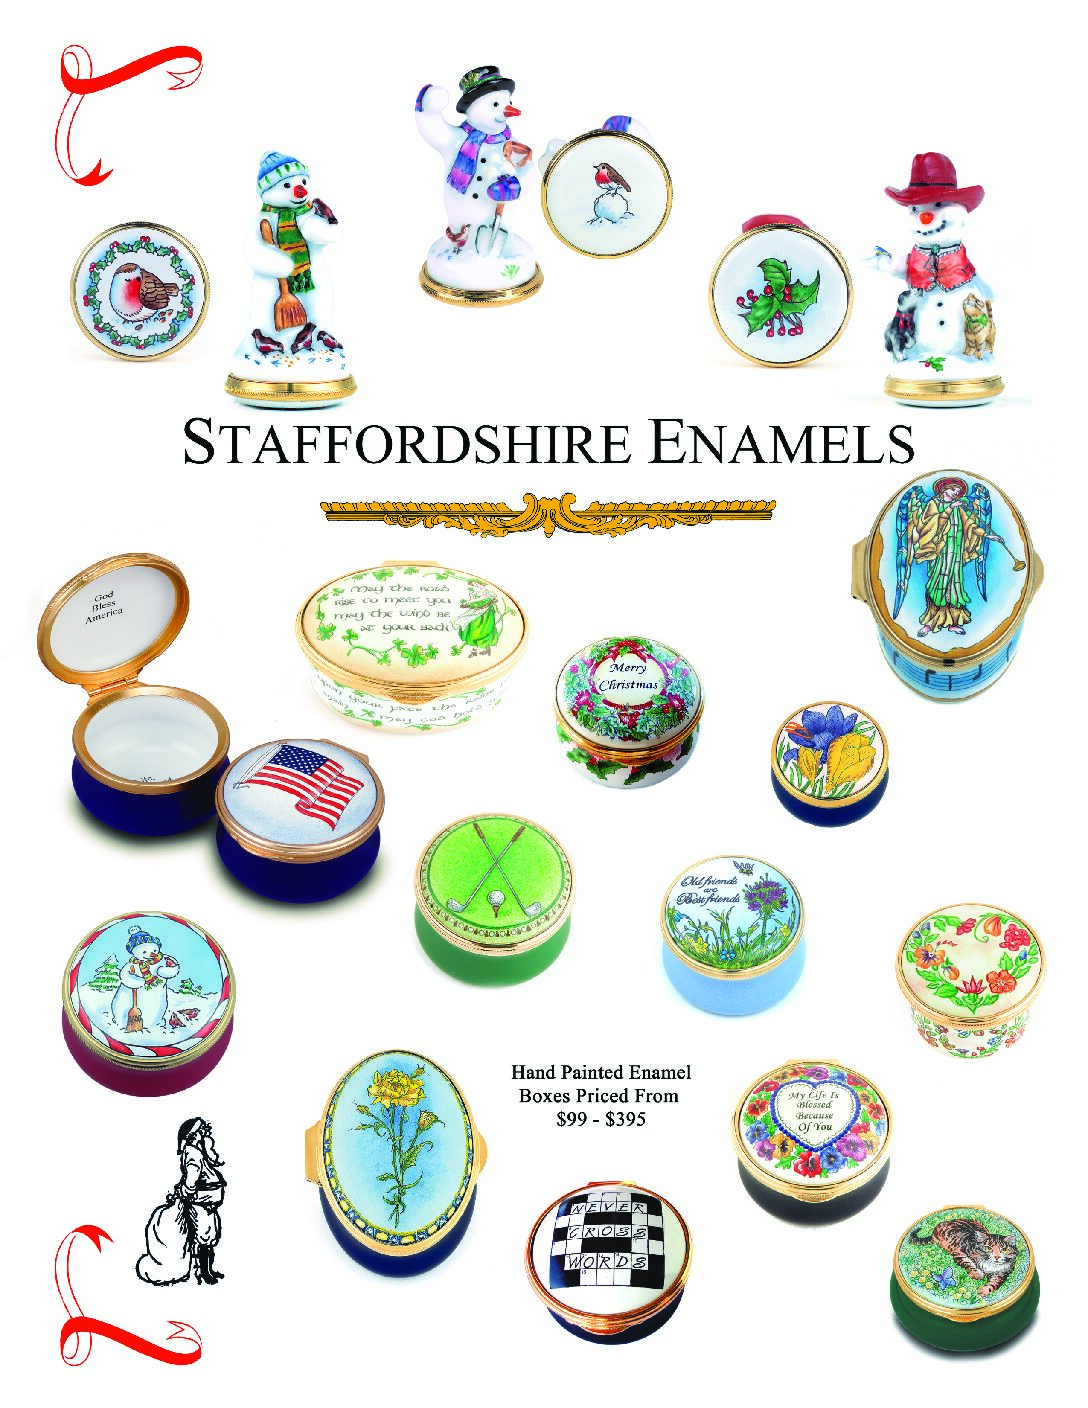 Staffordshire Enamel Gift Guide